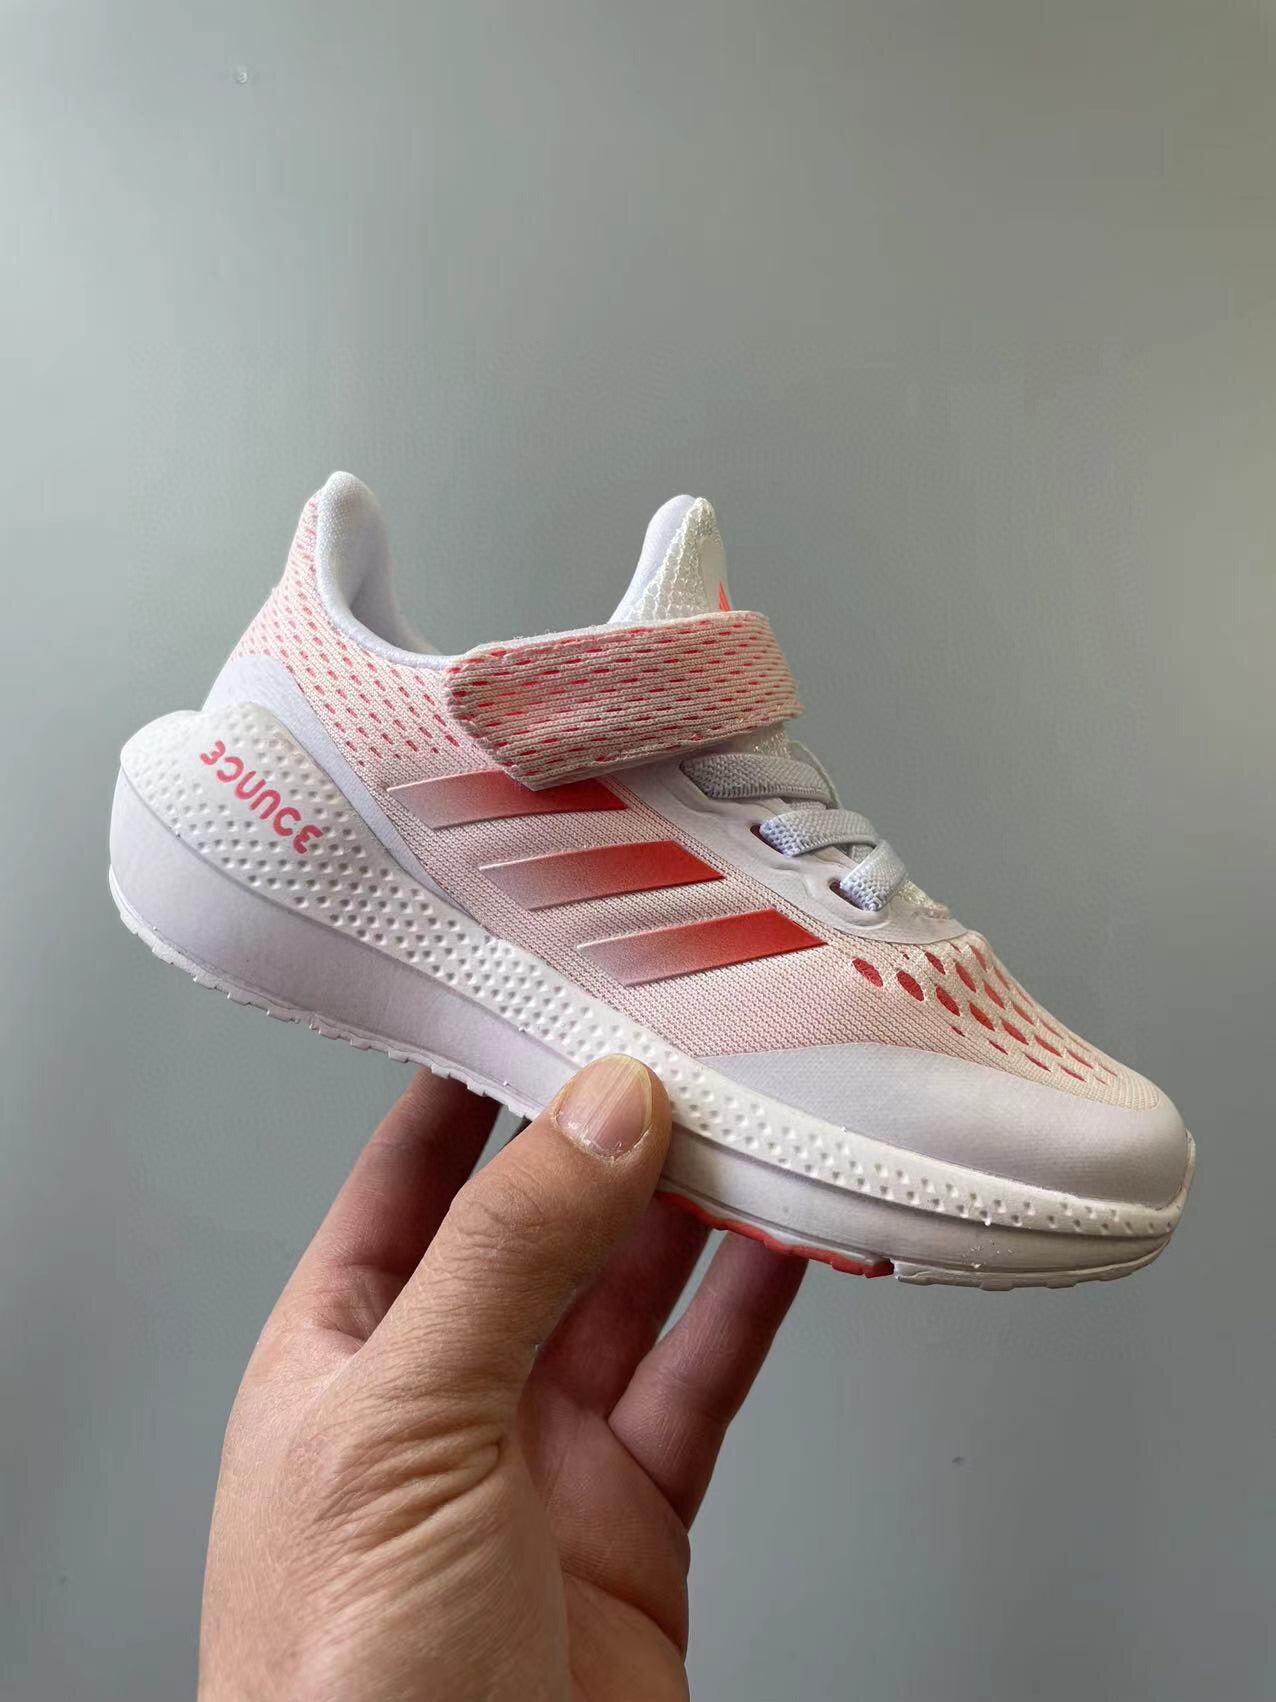 Adidas ultraboost pink/white